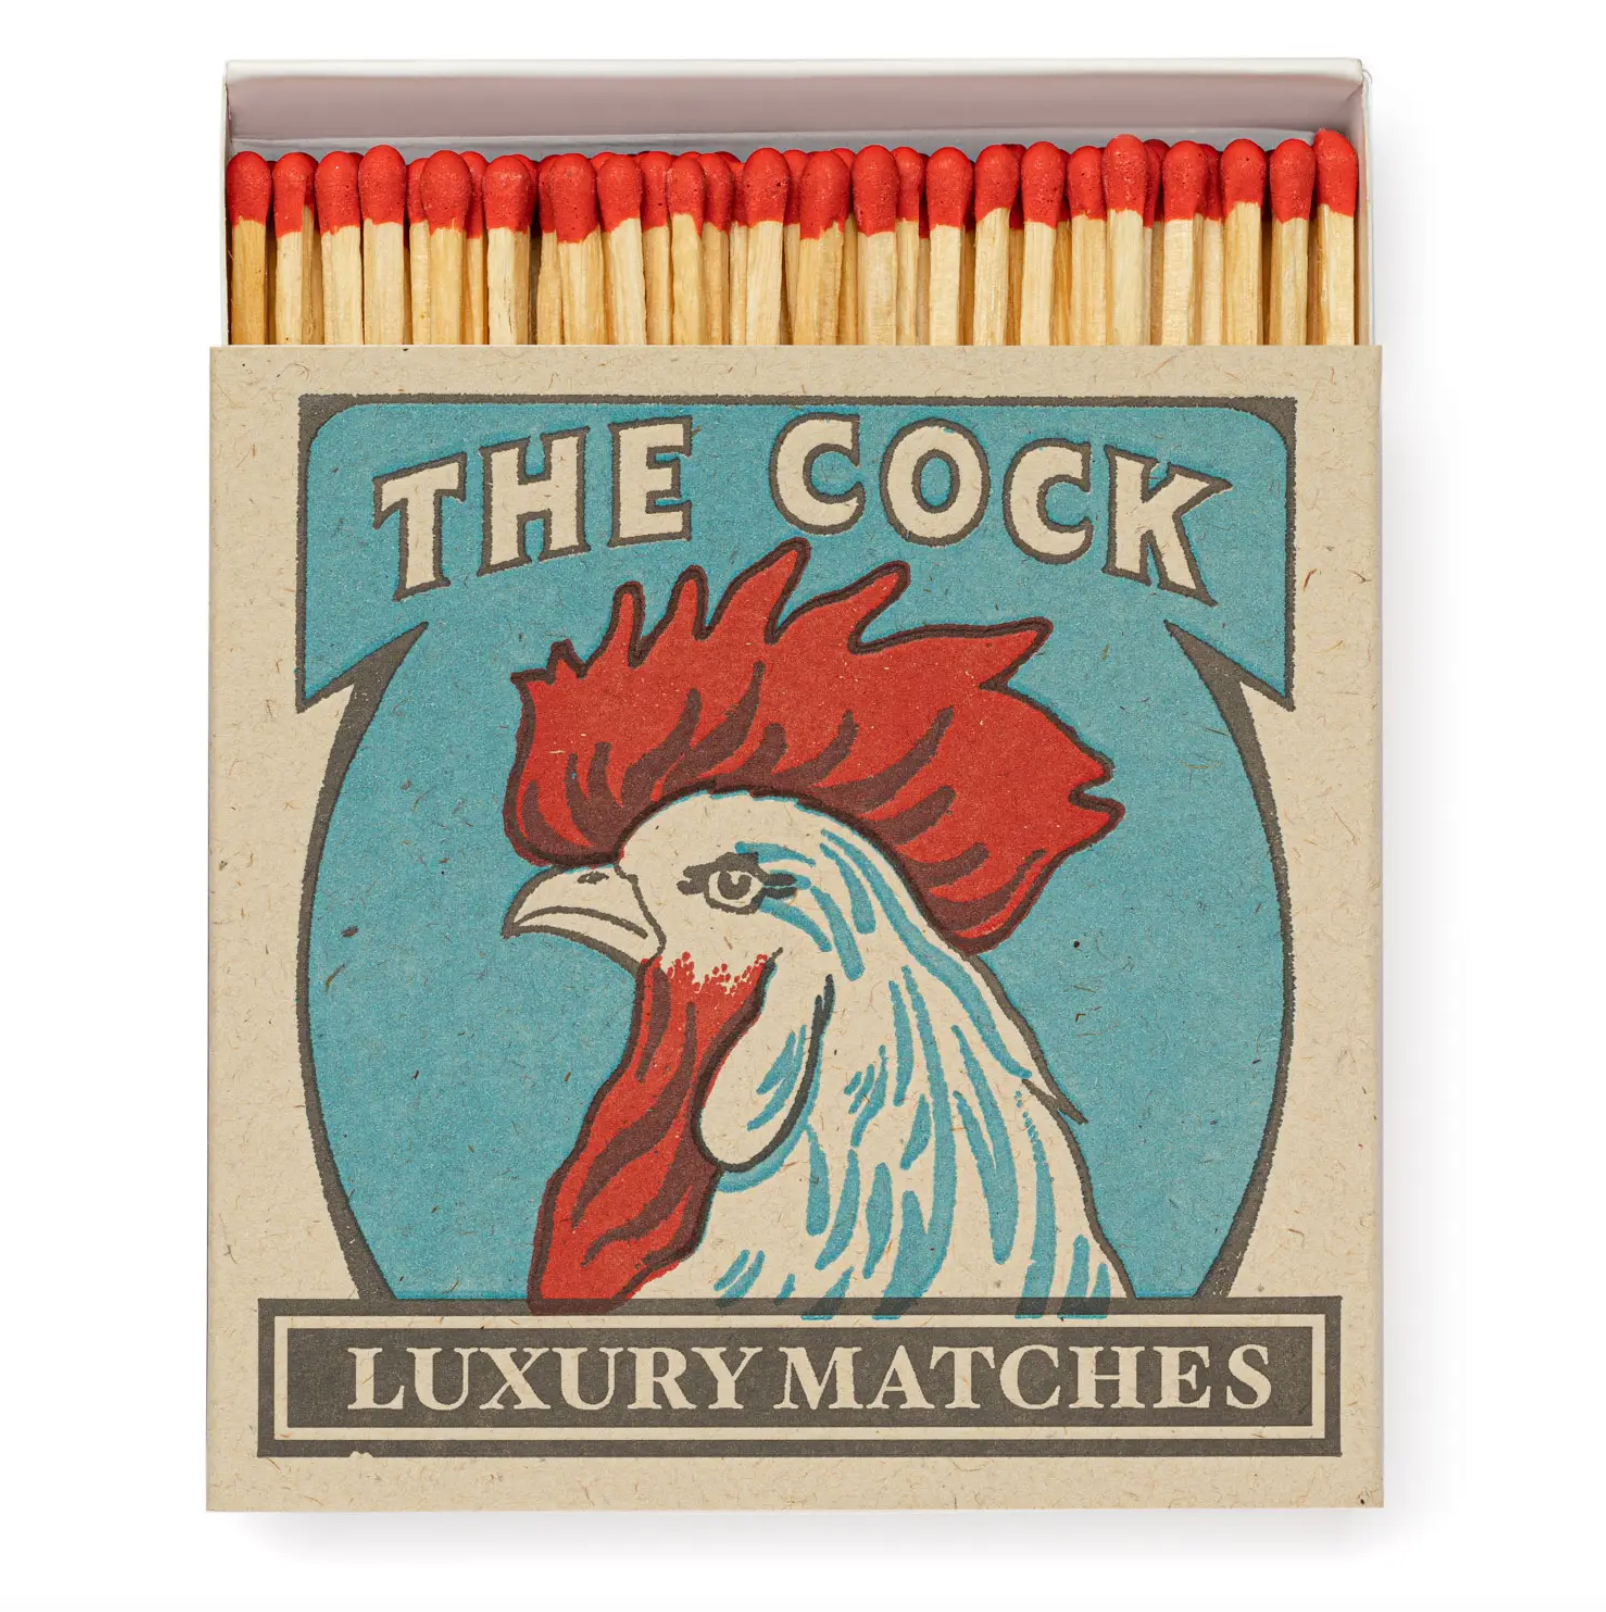 the cock: big box matches